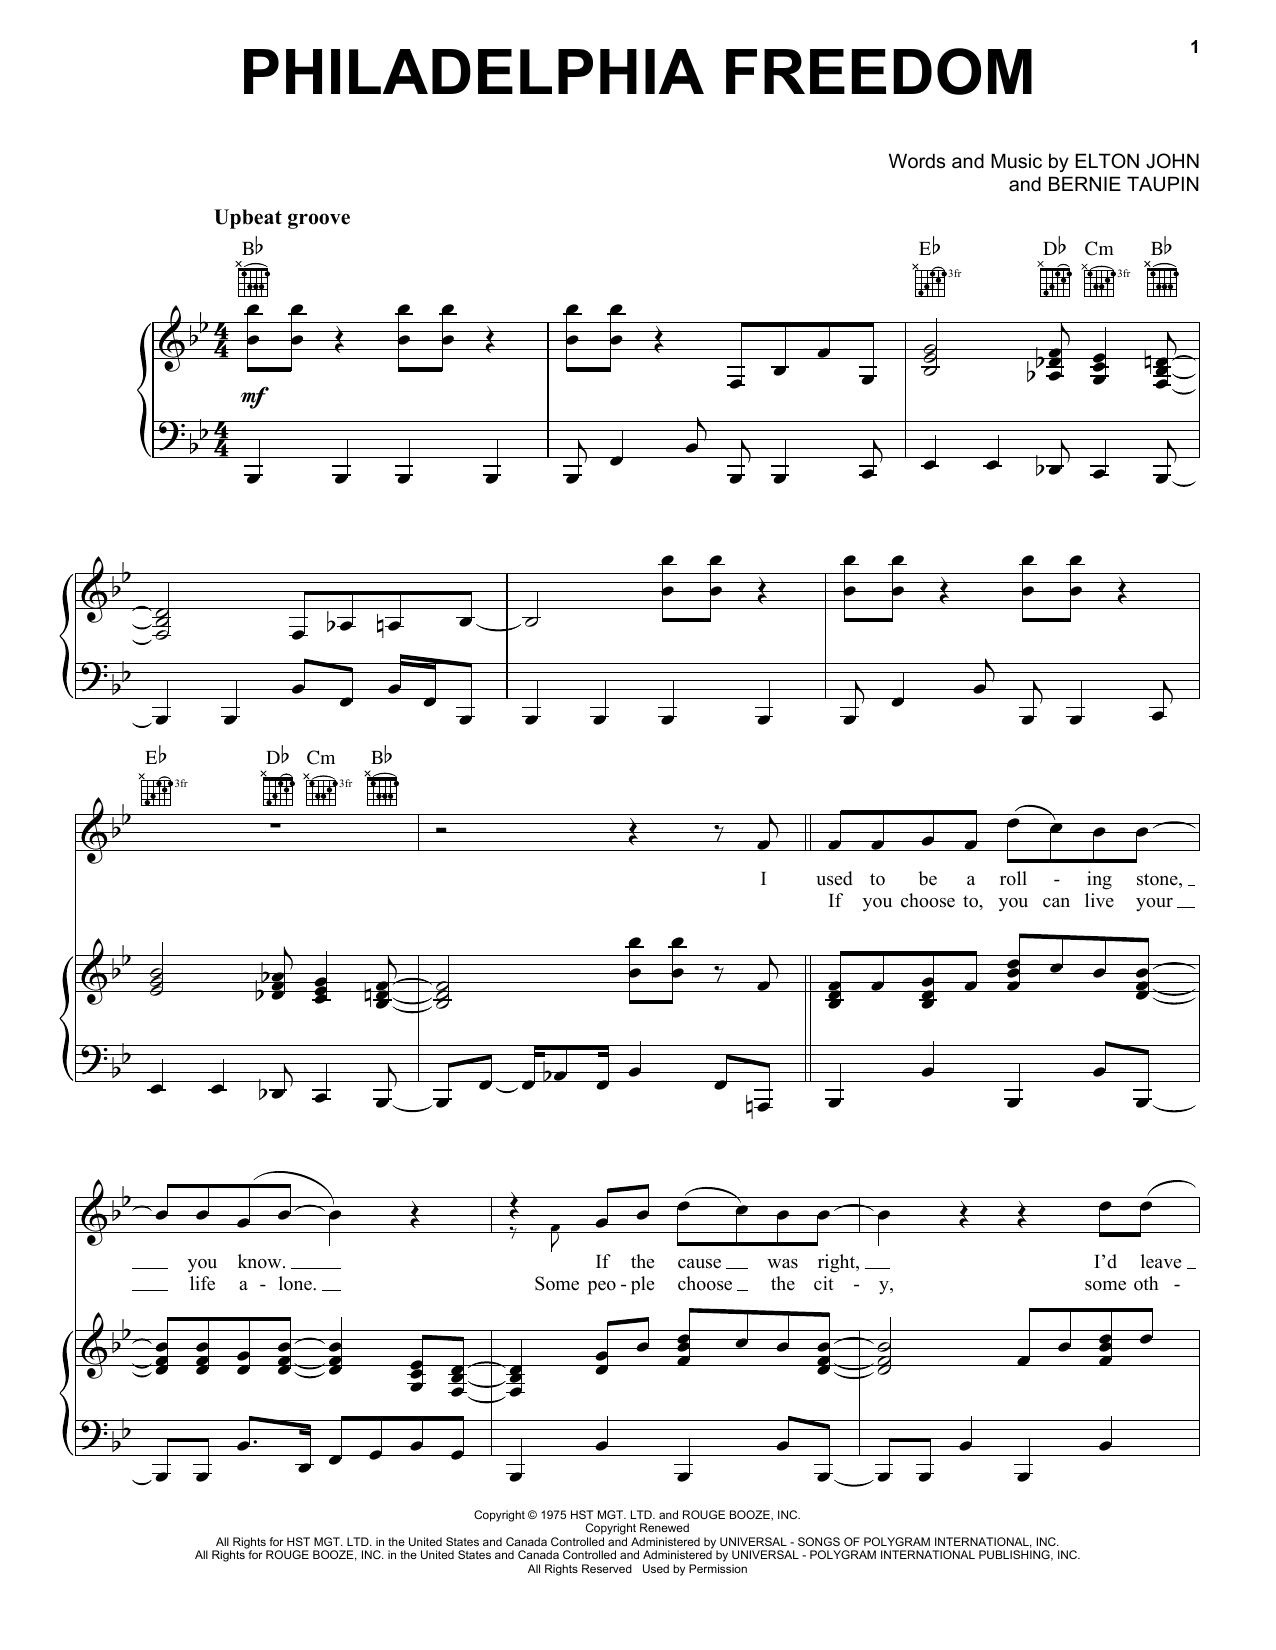 Download Elton John Philadelphia Freedom Sheet Music and learn how to play Lyrics & Chords PDF digital score in minutes